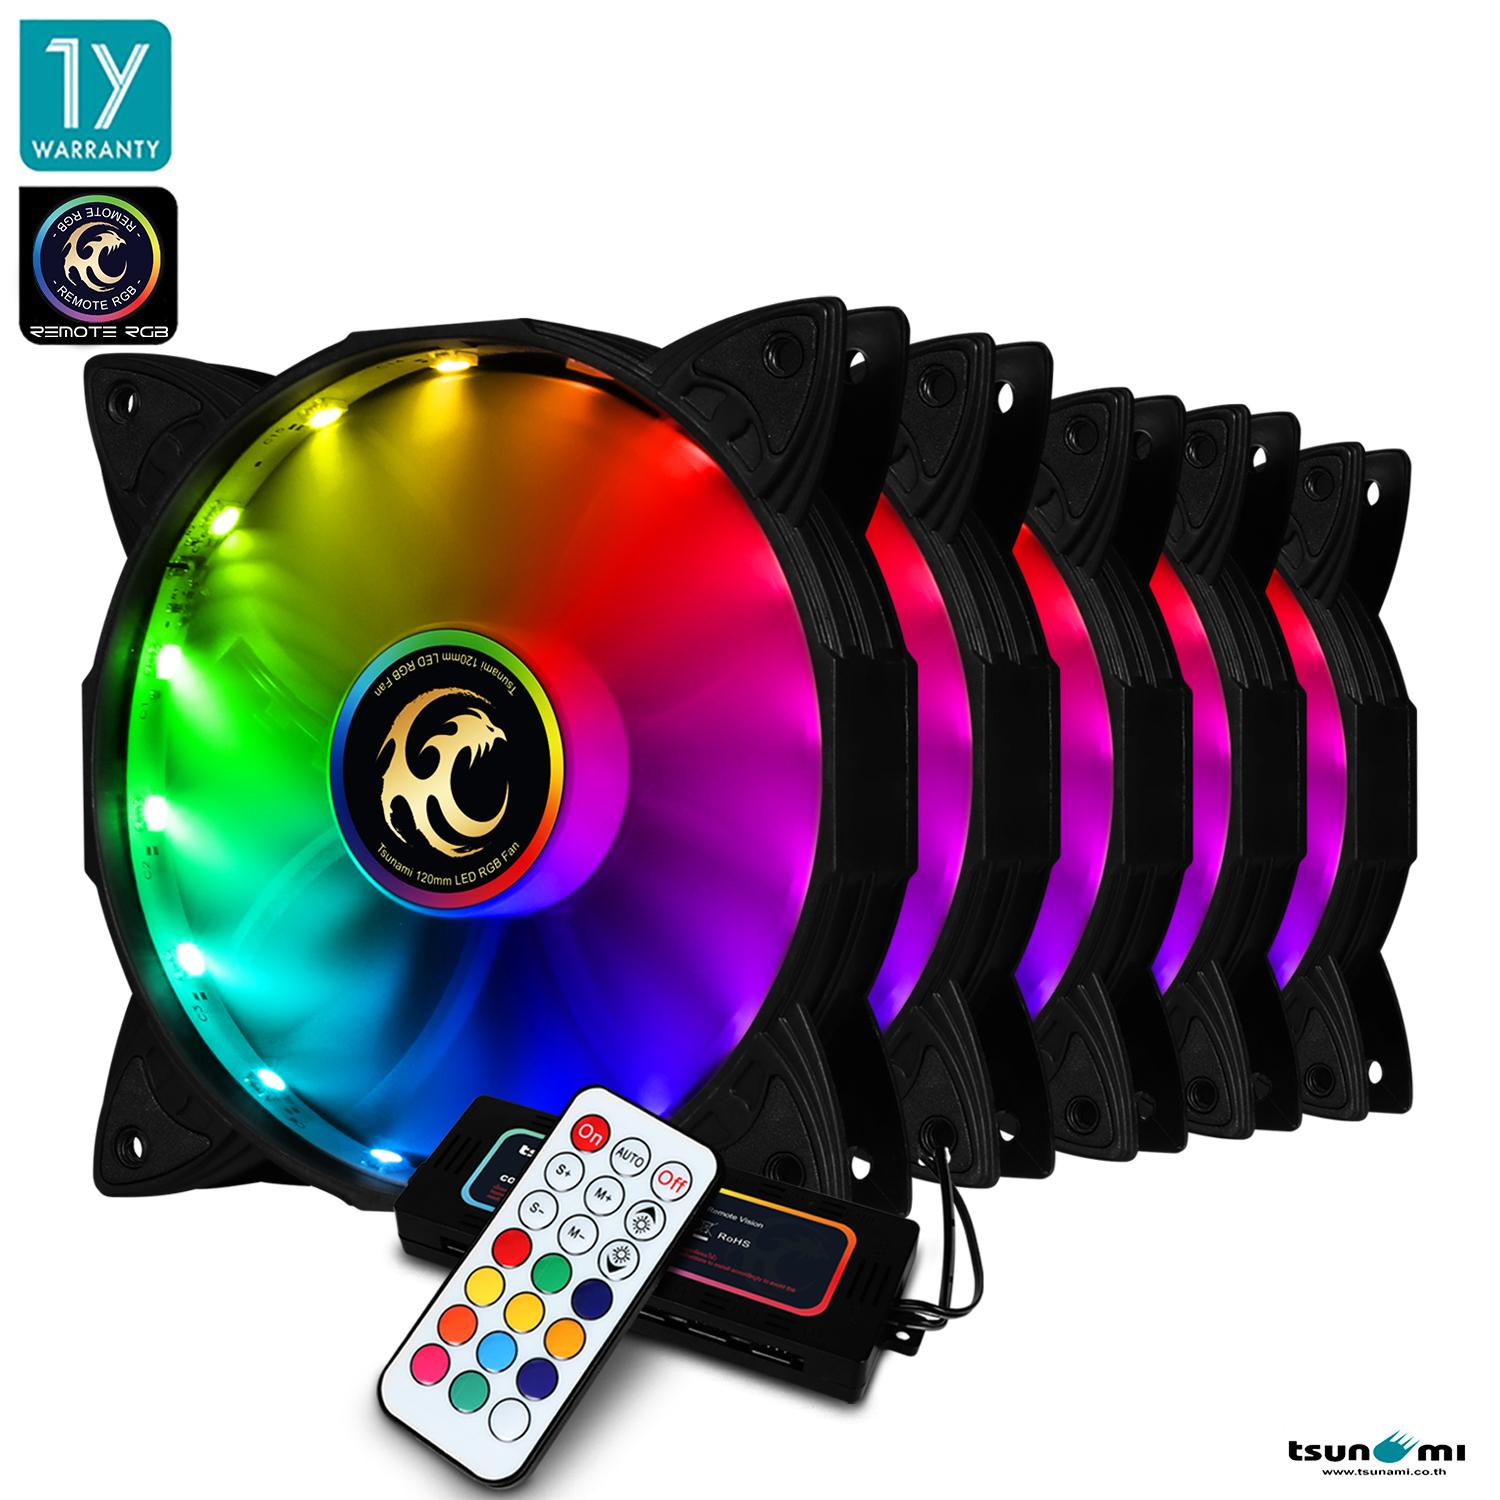 Tsunami Rainbow Series RGB Cooling Fan X 5   120mm with Remote Control